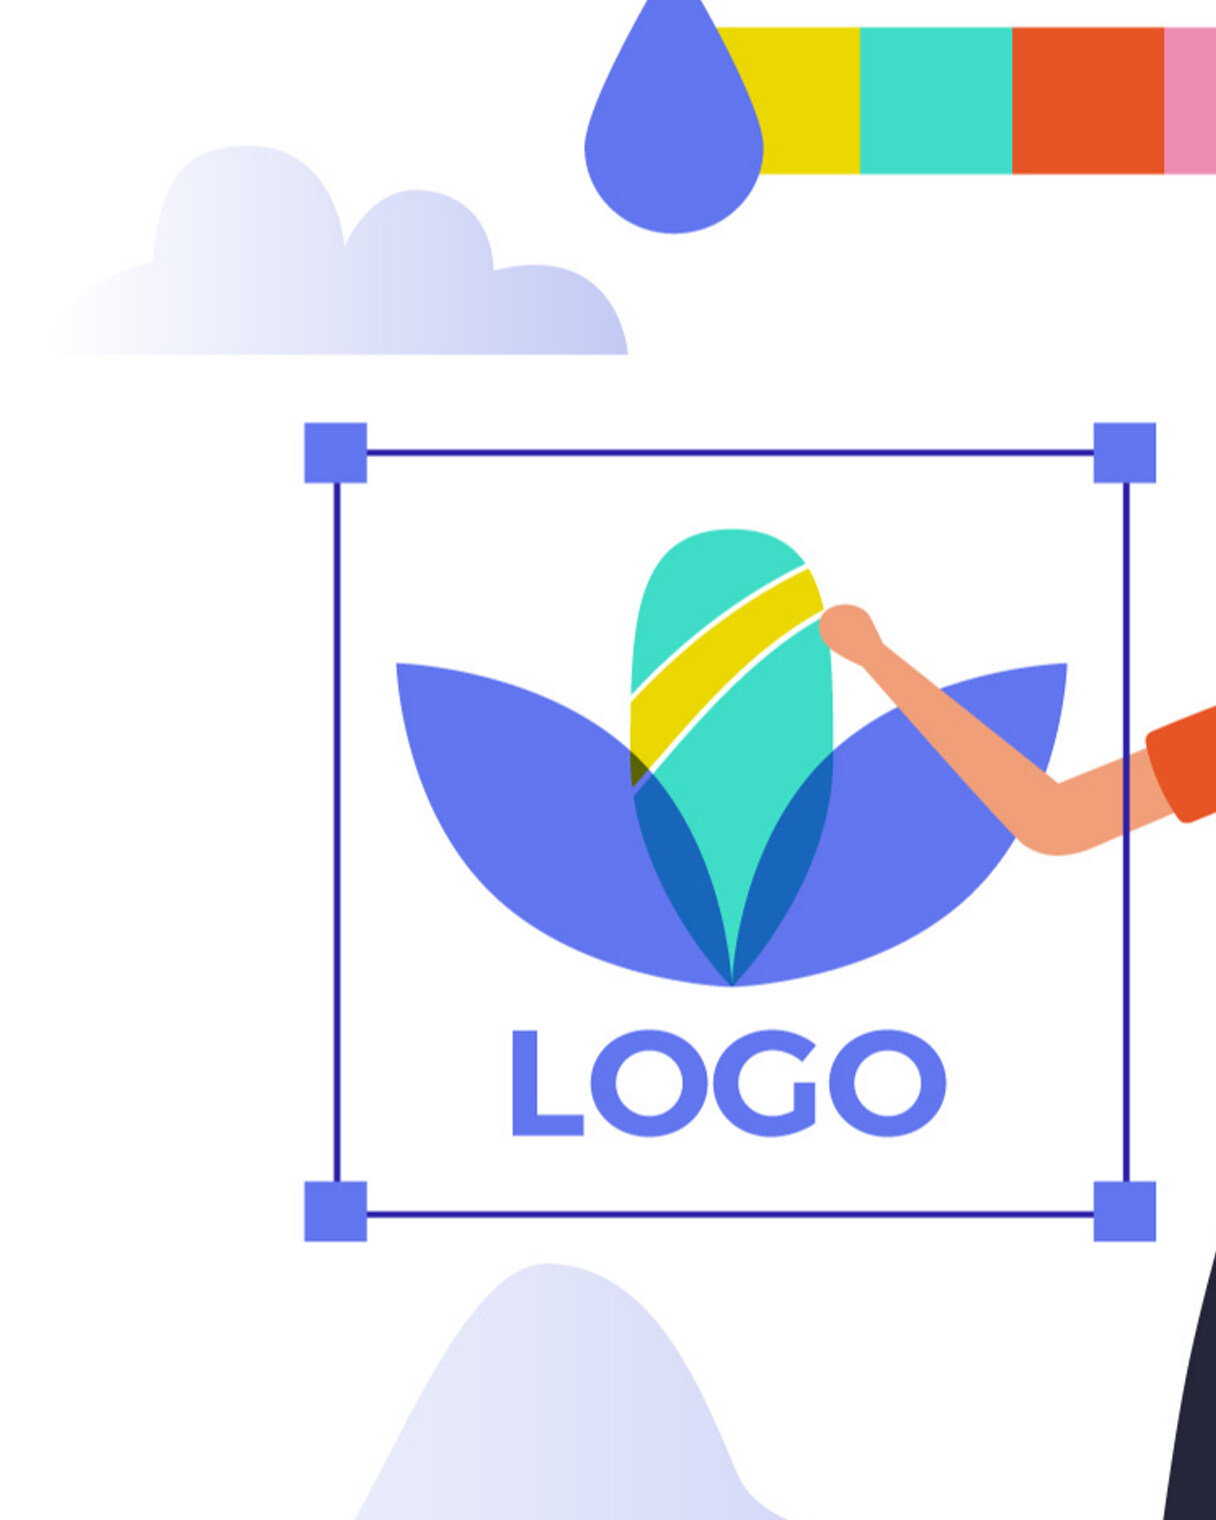 Logo Design, Brand, Graphic Element's, & Color